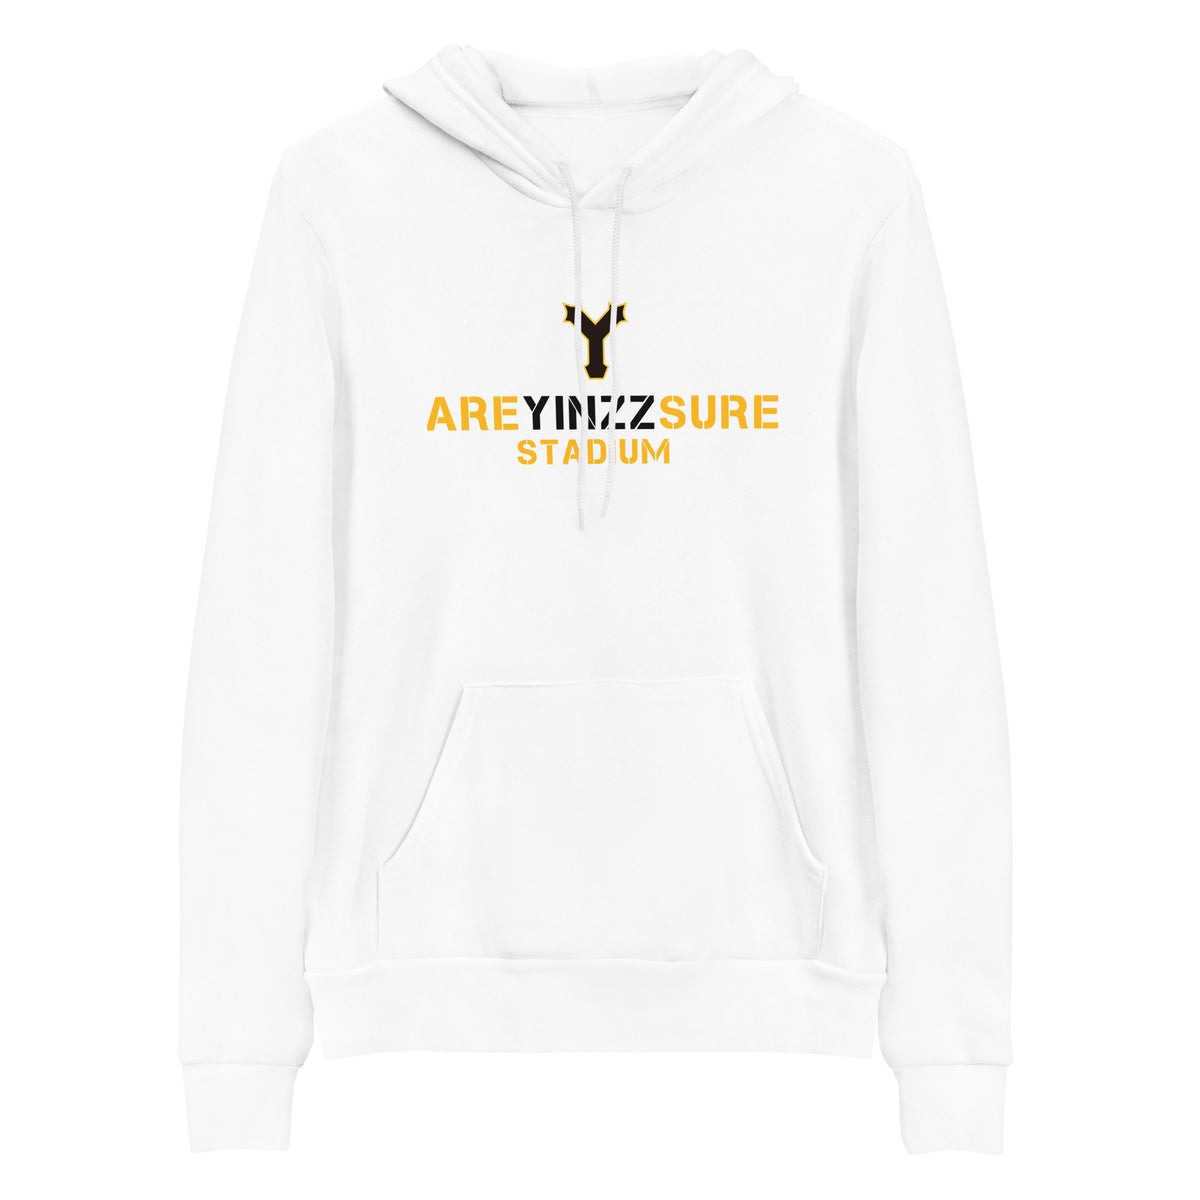 AreYINZZsure Stadium | Yinzz Hoodie